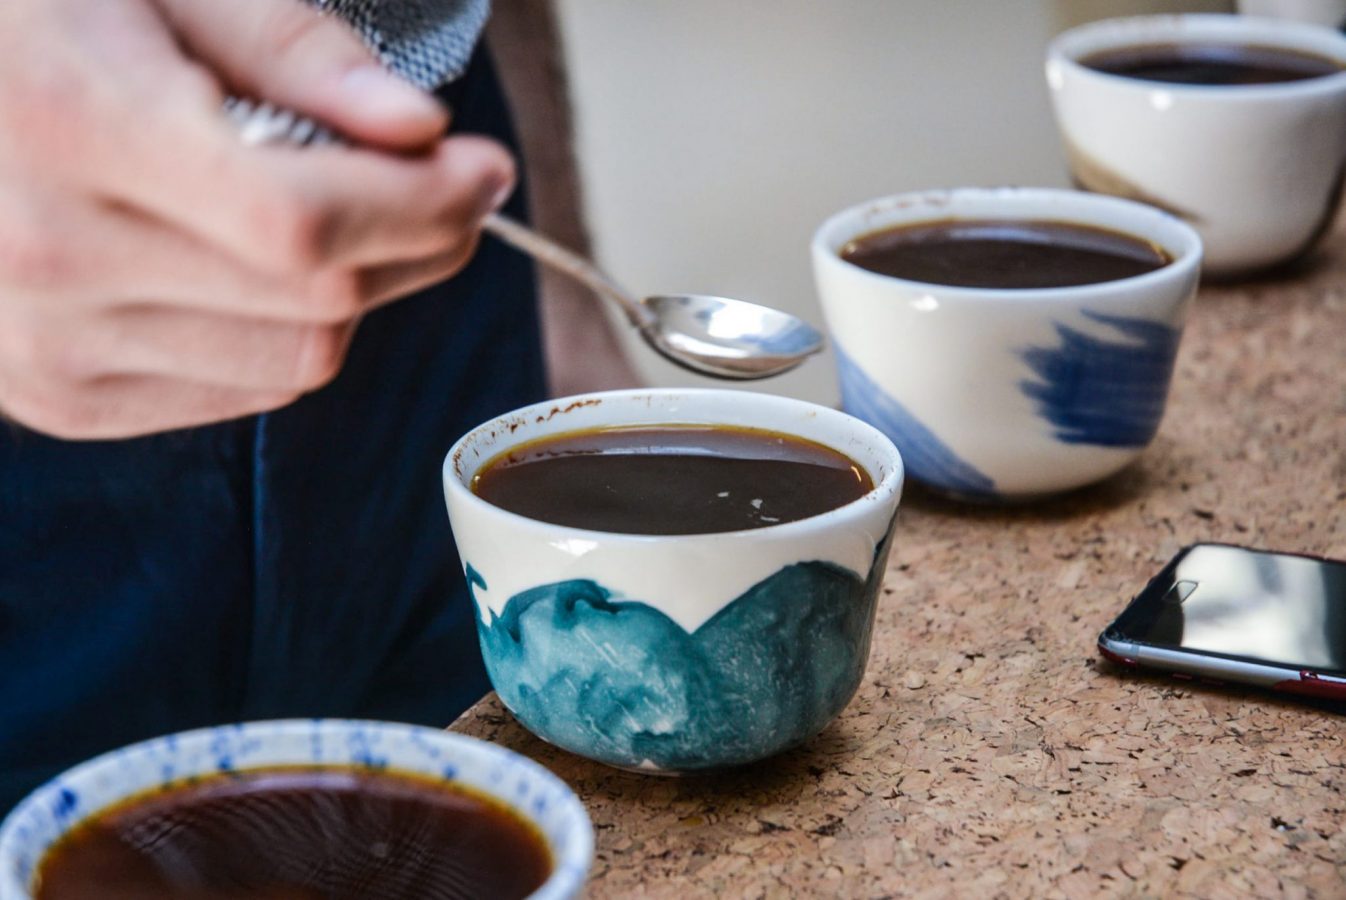 kawa - coffee plant - cupping - cuppingowe starcie - siorbka